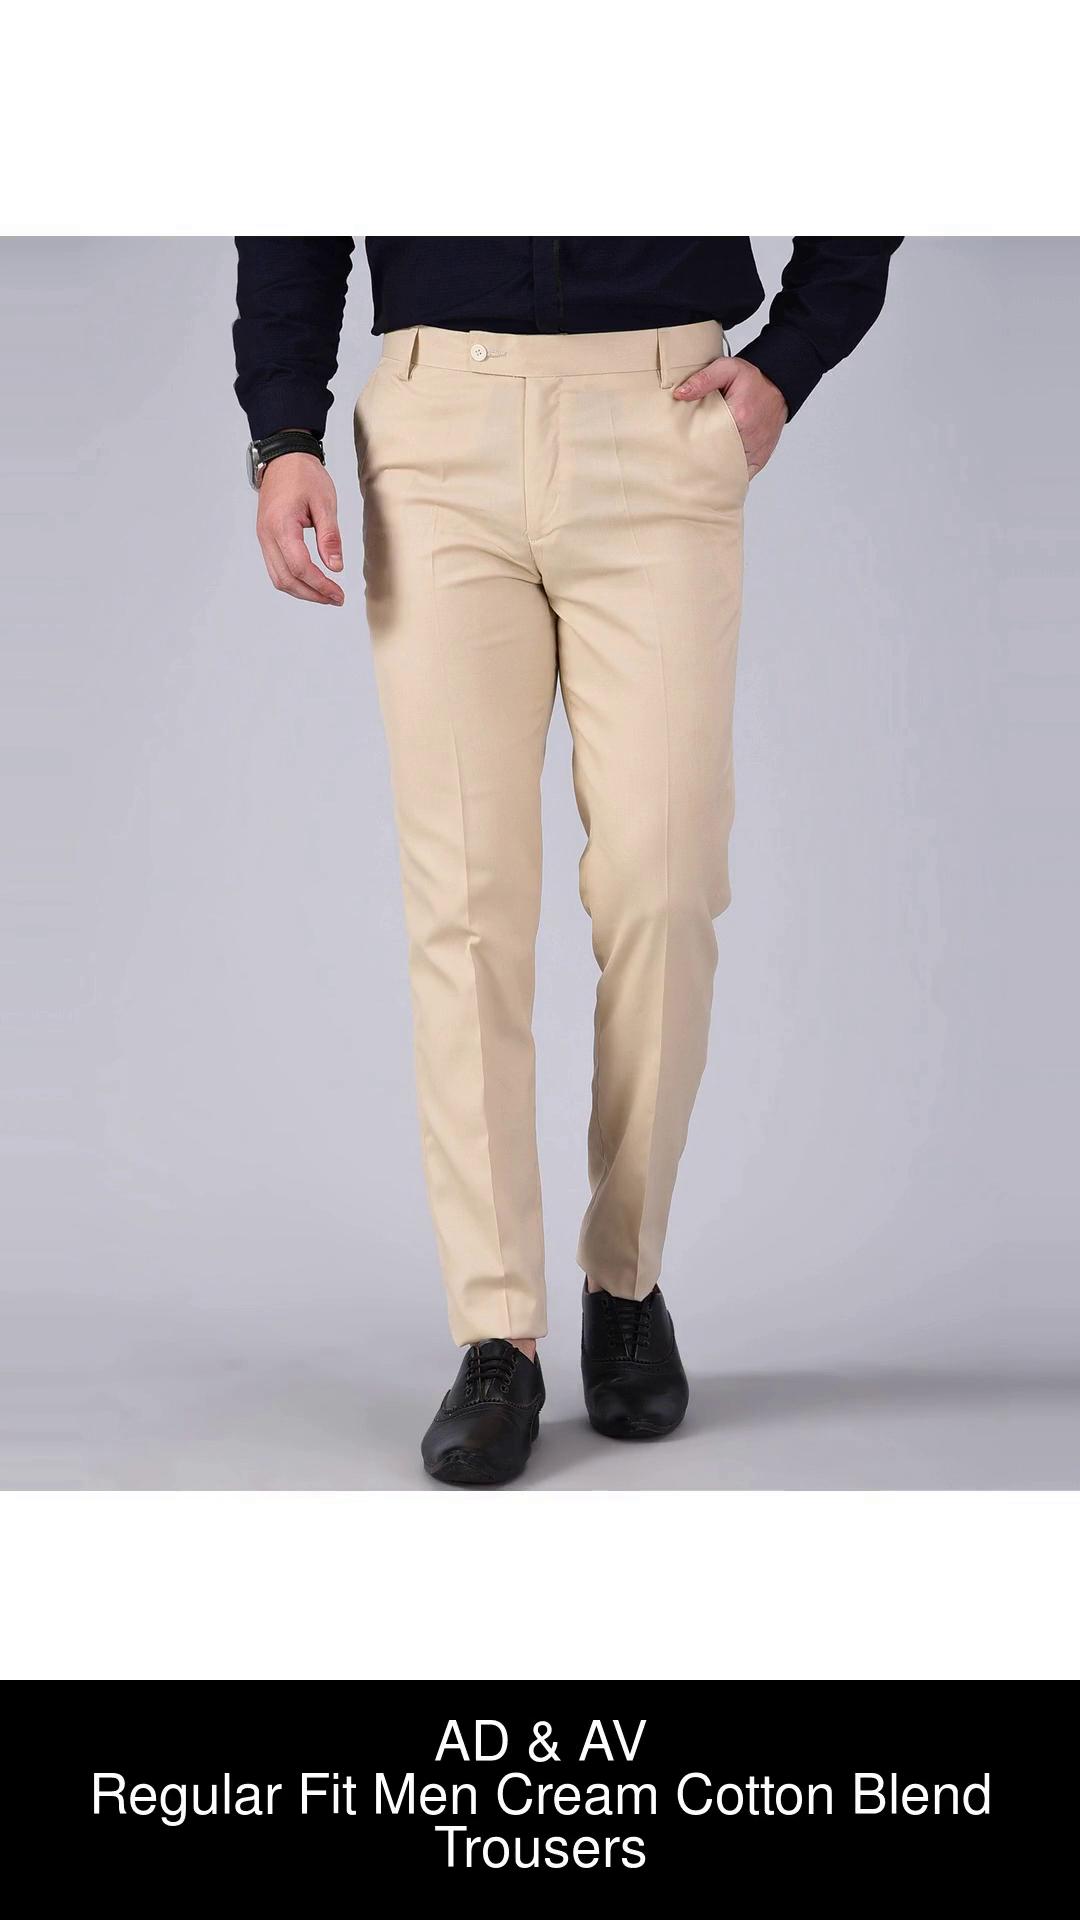 Buy Beige Trousers  Pants for Men by LOUIS PHILIPPE Online  Ajiocom